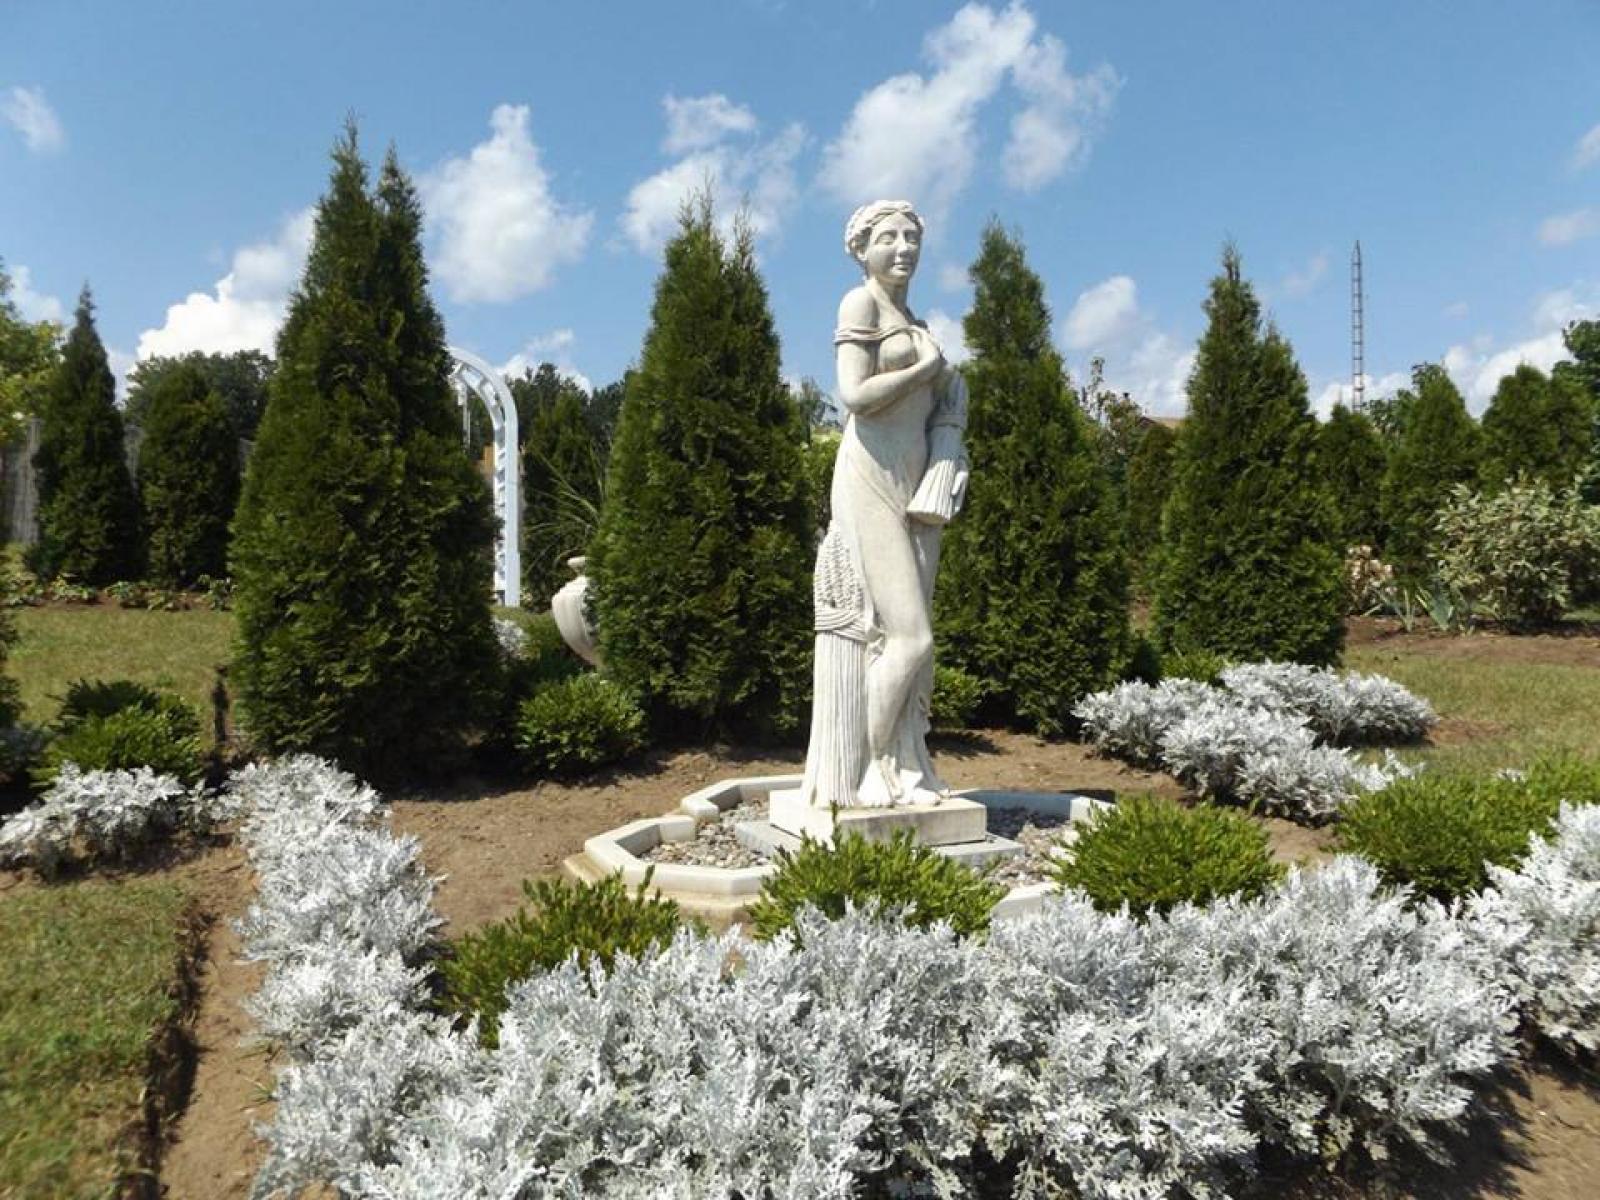 The White Garden features elegant statuary.